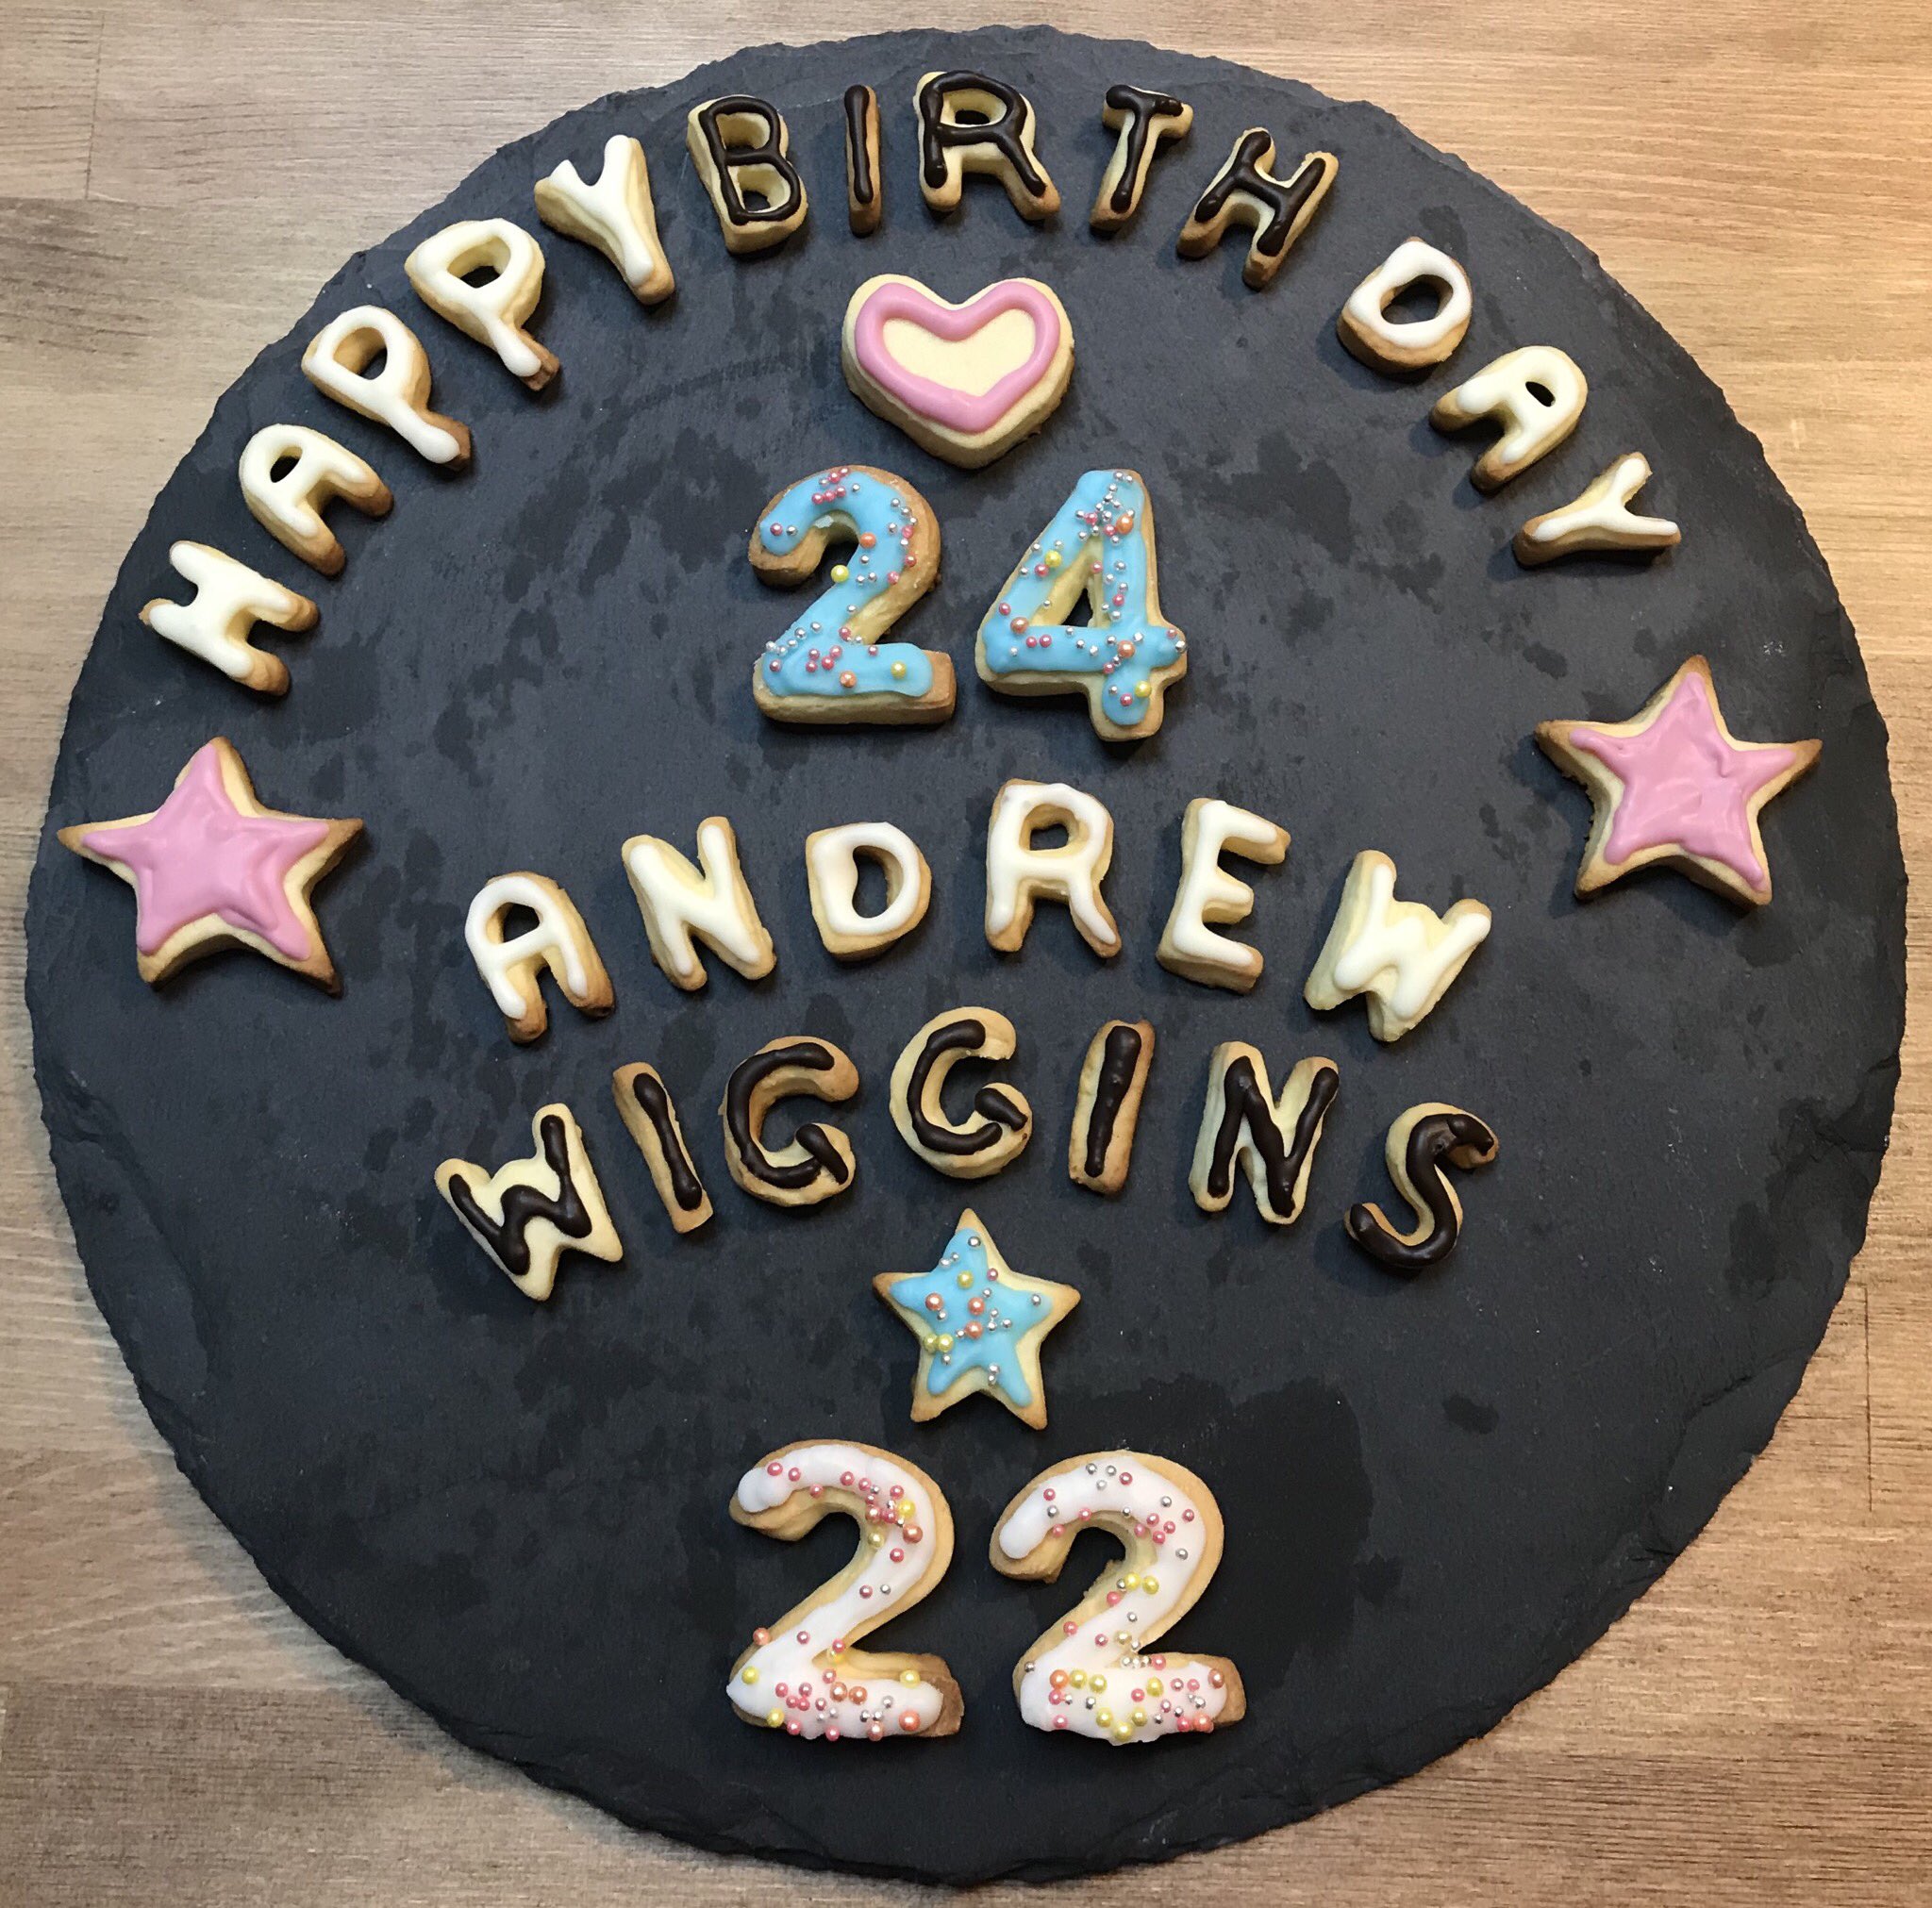   HAPPY  BIRTHDAY   Andrew Wiggins 